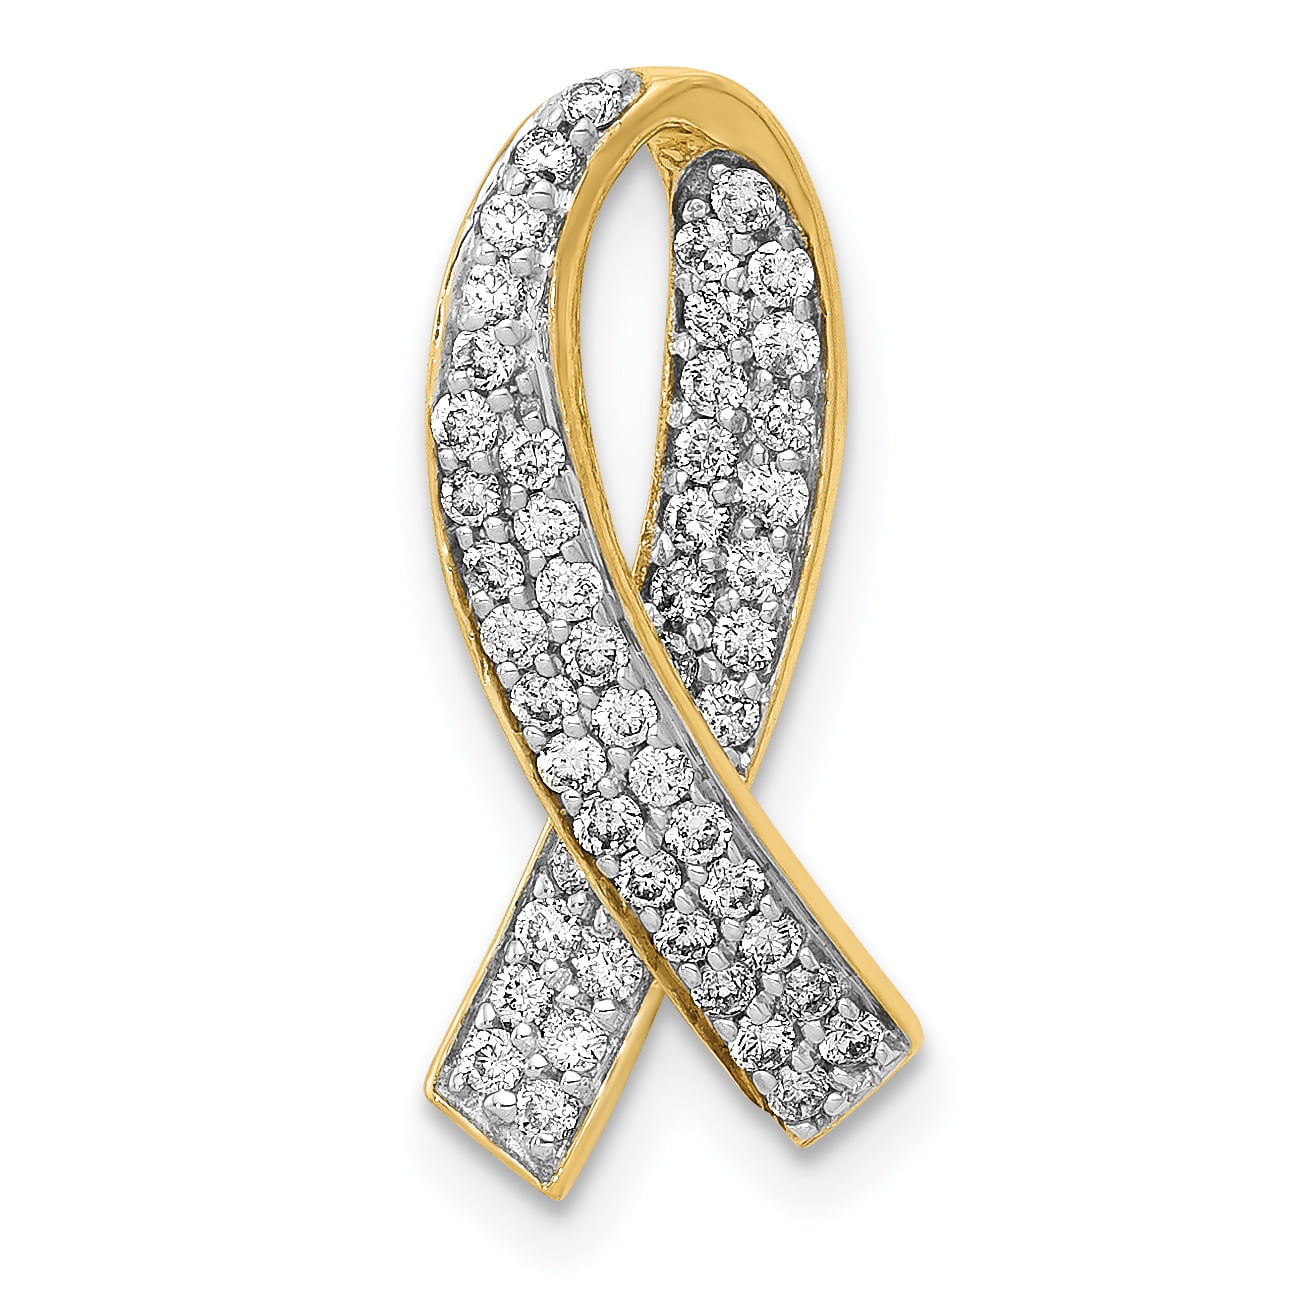 Fine Diamond Jewelry - 14k Diamond Breast Cancer Awareness Pendant